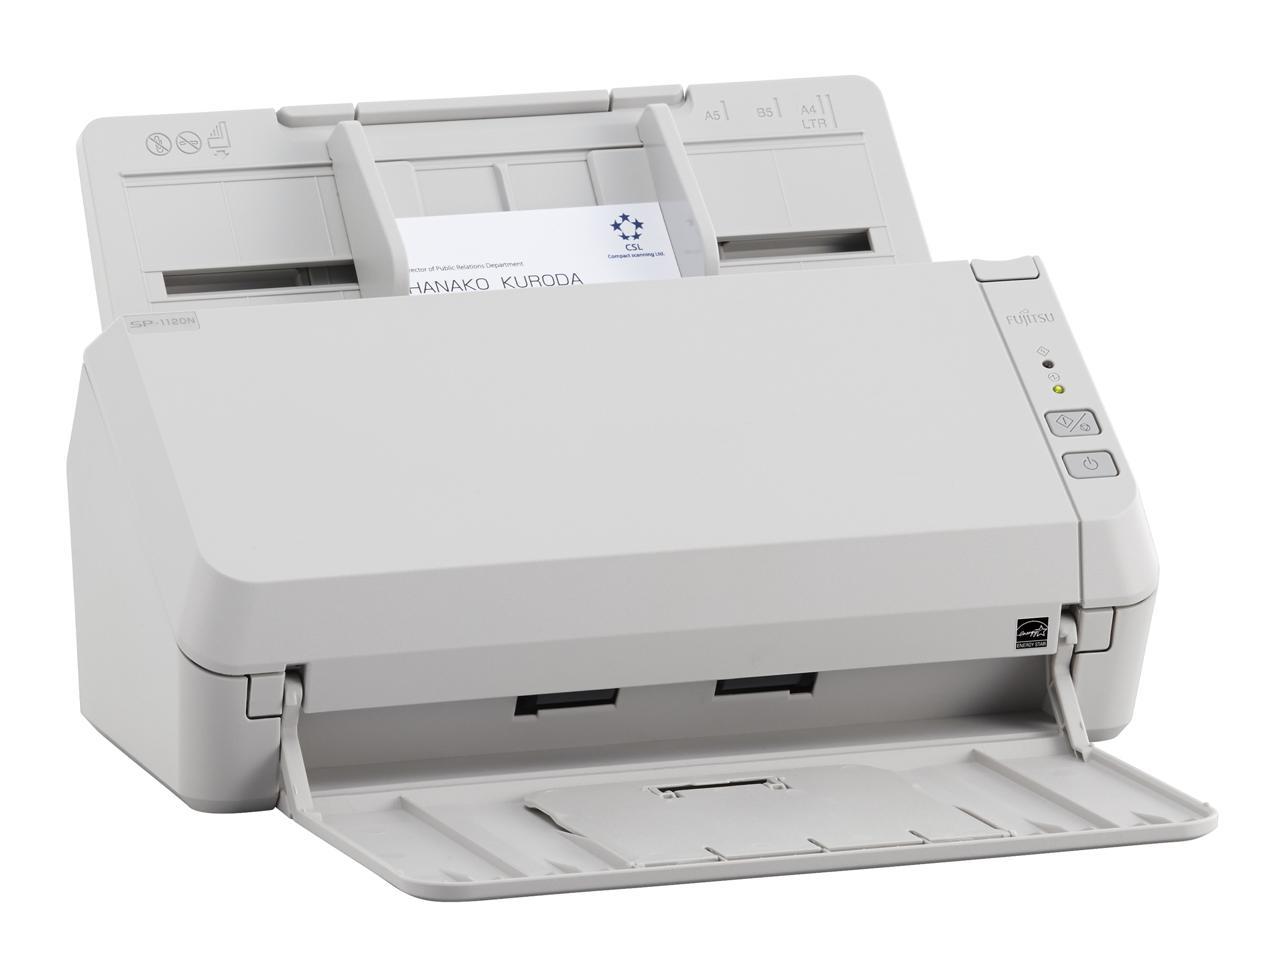 Fujitsu Image Scanner SP-1120N PA03811-B005 ADF (Automatic Document Feeder), Duplex Document Scanner